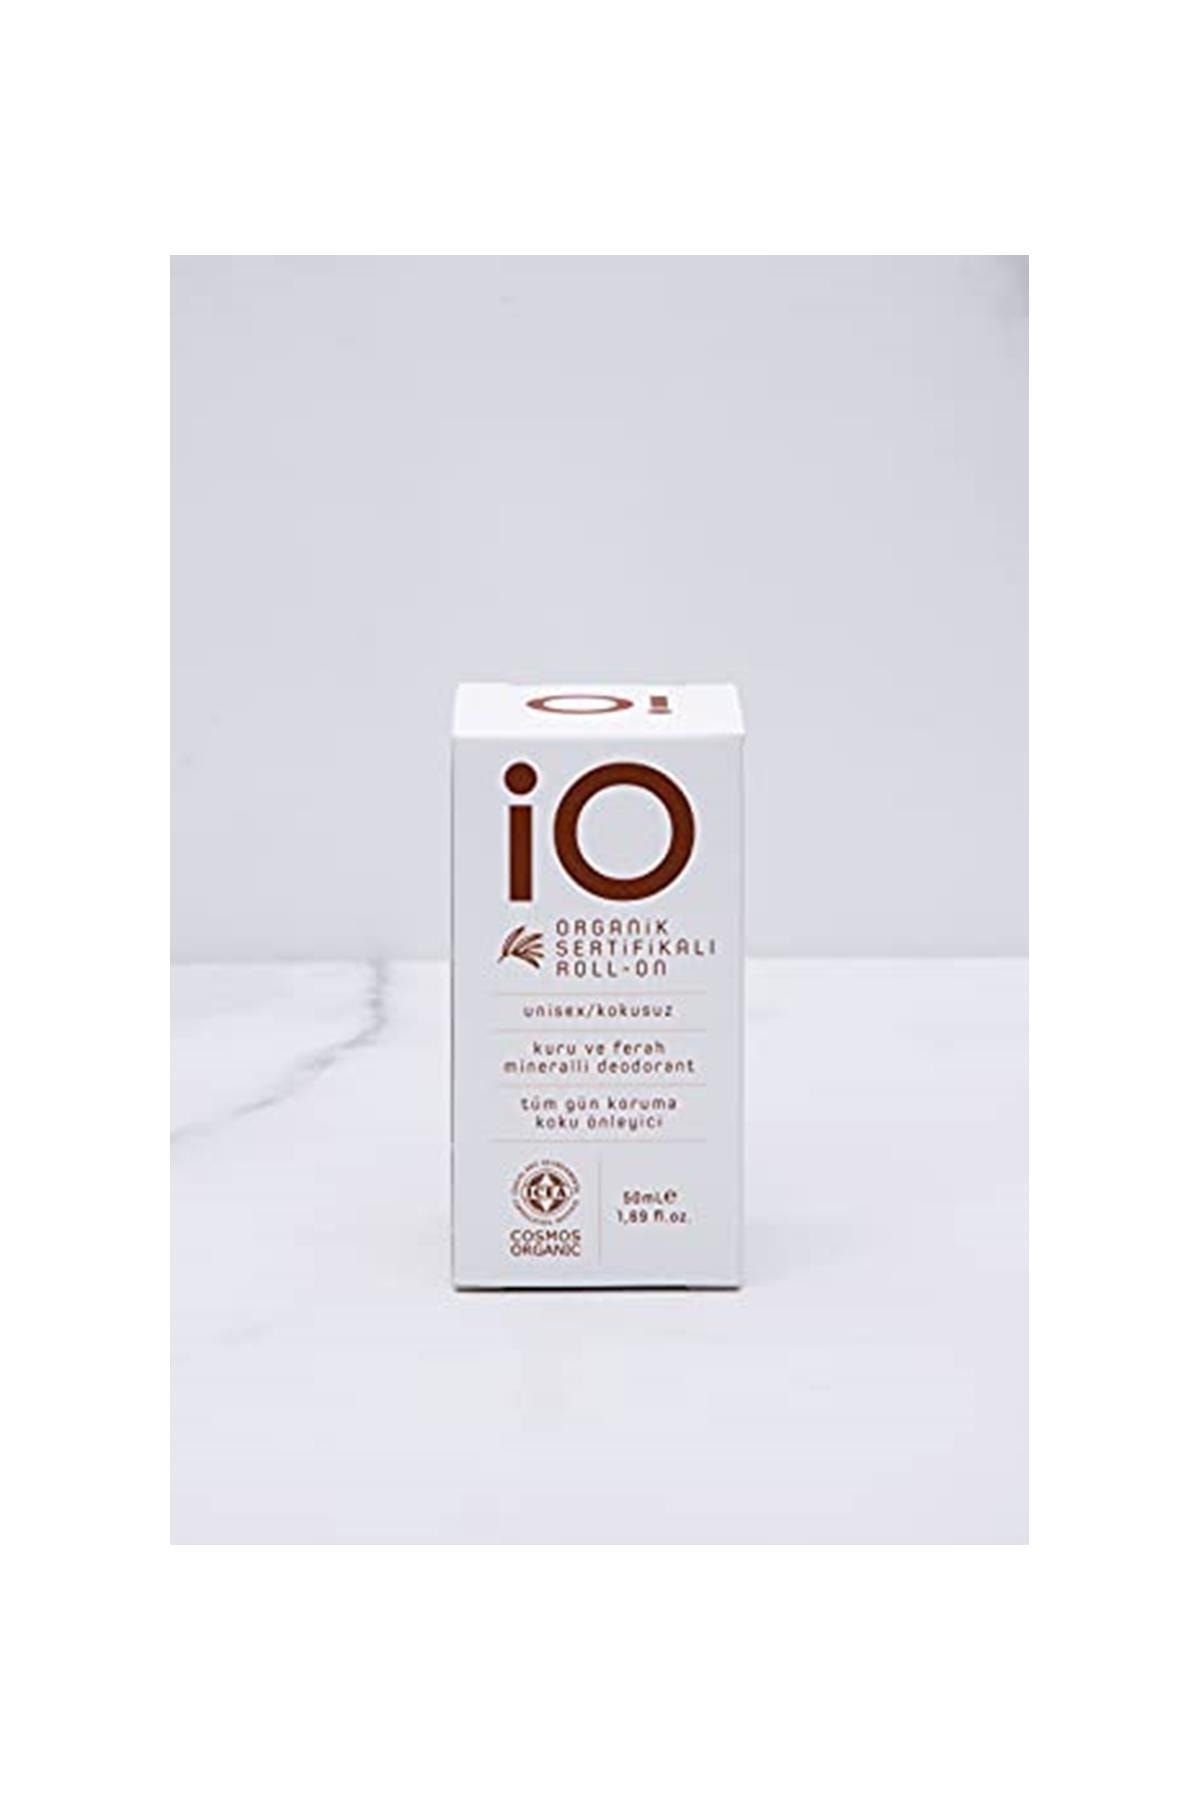 io Marka: Organik Sertifikalı Roll-on Unisex ( Unscented/kokusuz ) Kategori: Deodorant